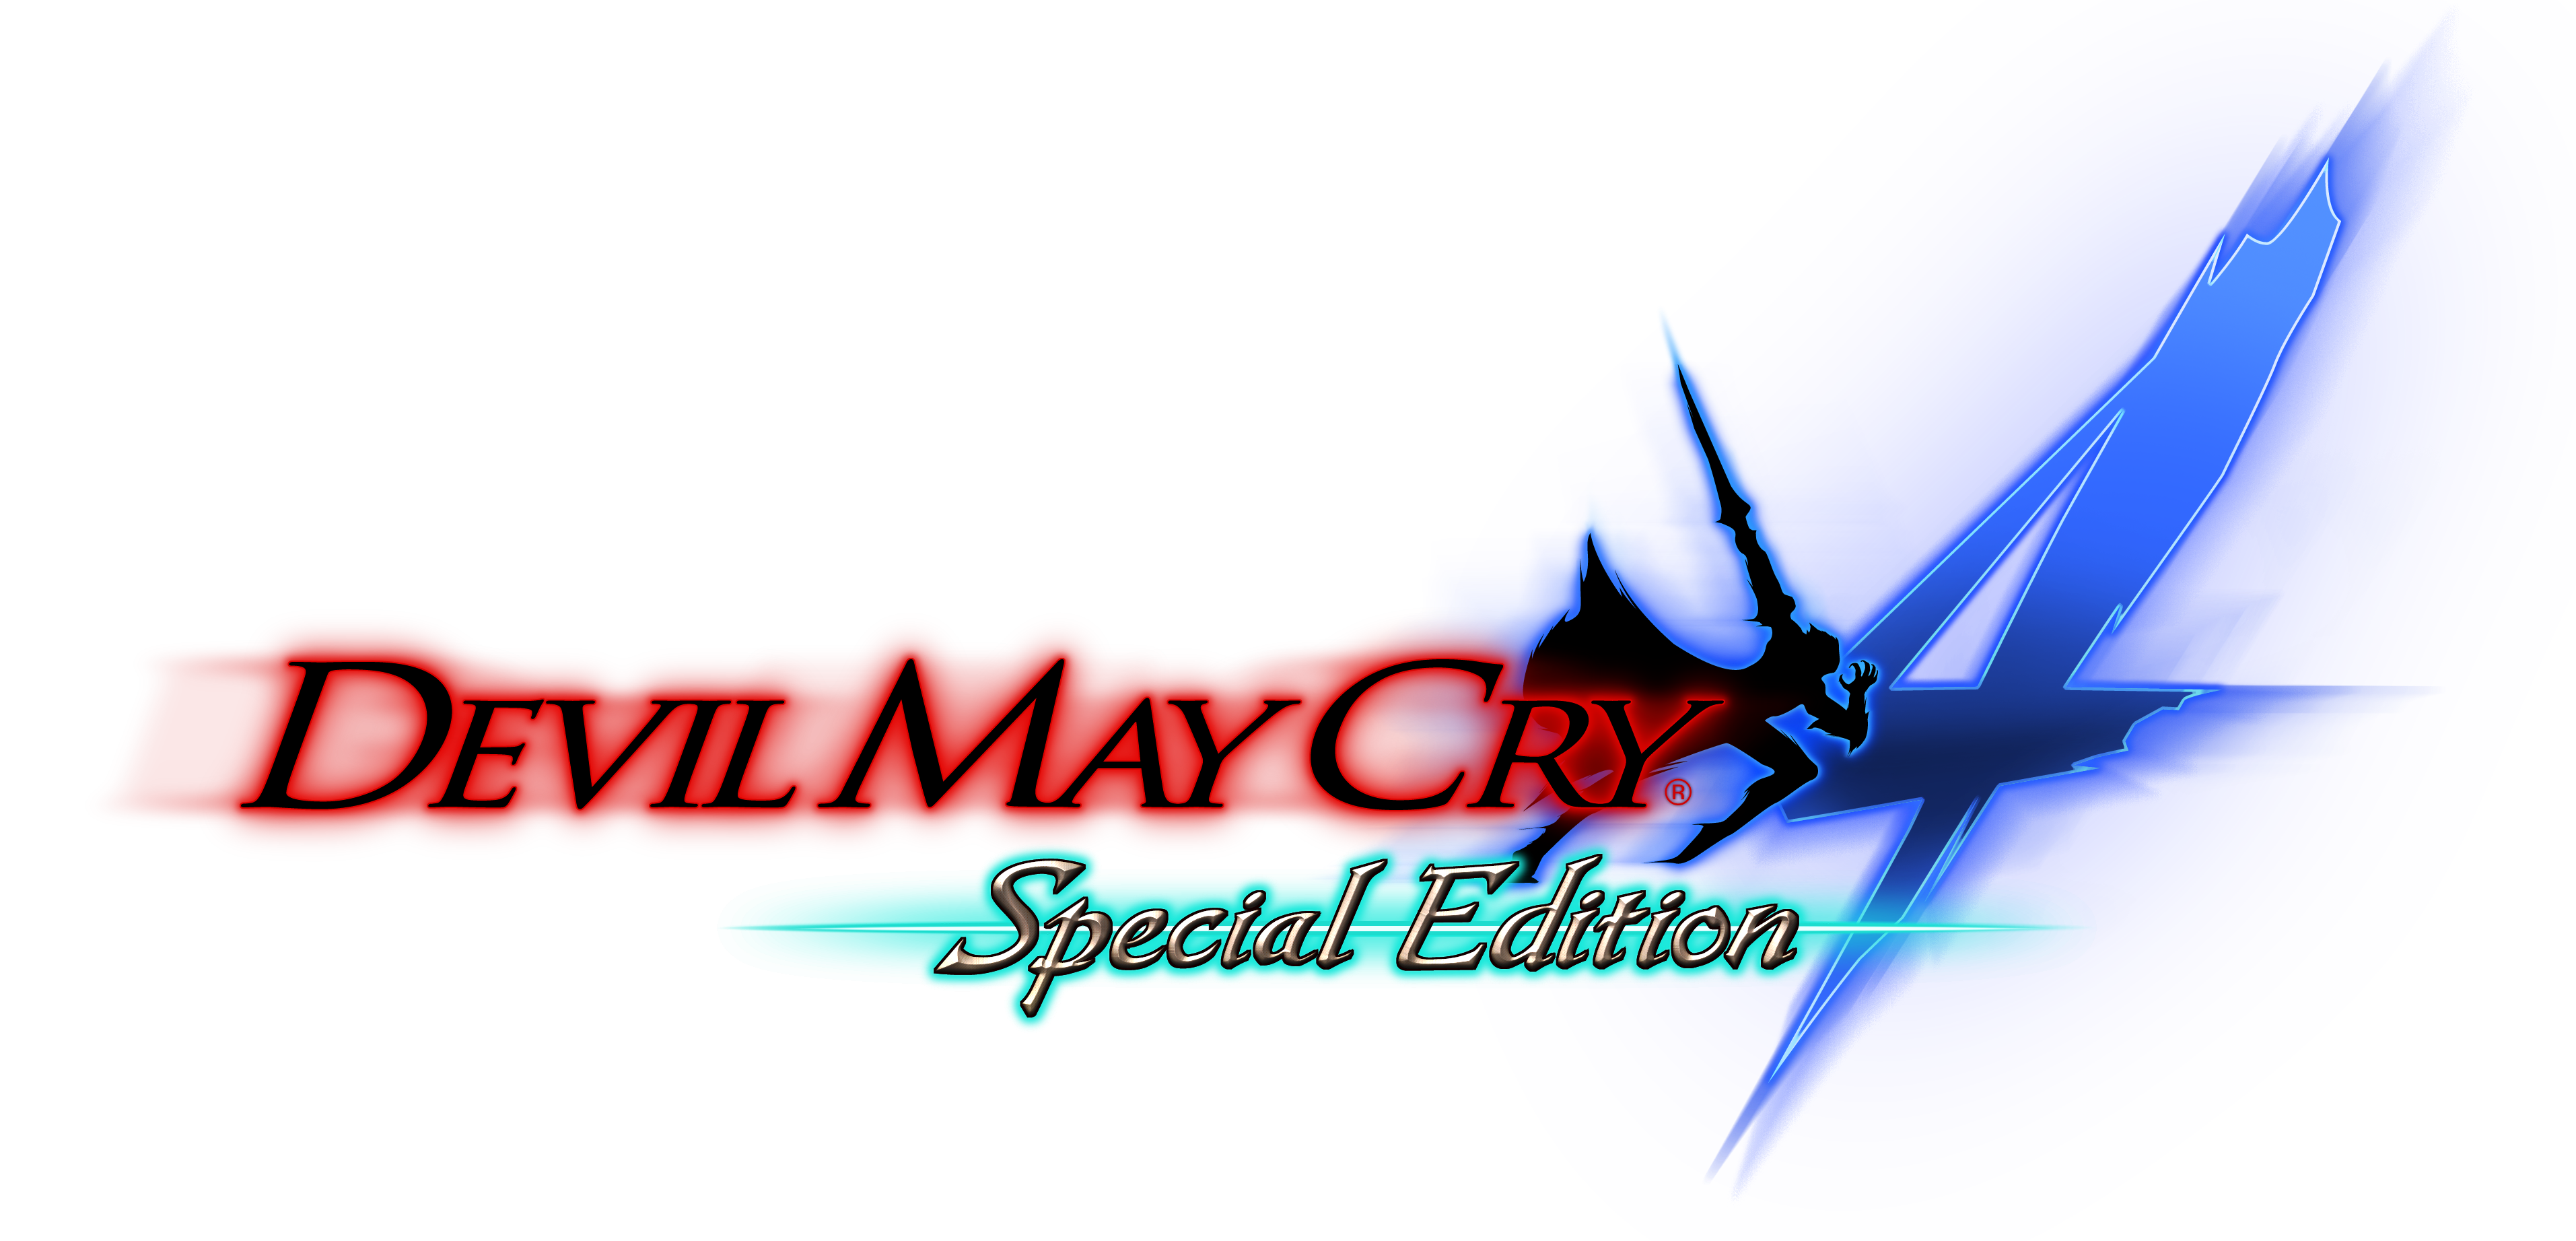 Dmc 4 special. Devil May Cry 4: Special Edition. ДМС 4 Special Edition. DMC 4 logo. Devil May Cry 4 Special Edition логотип.